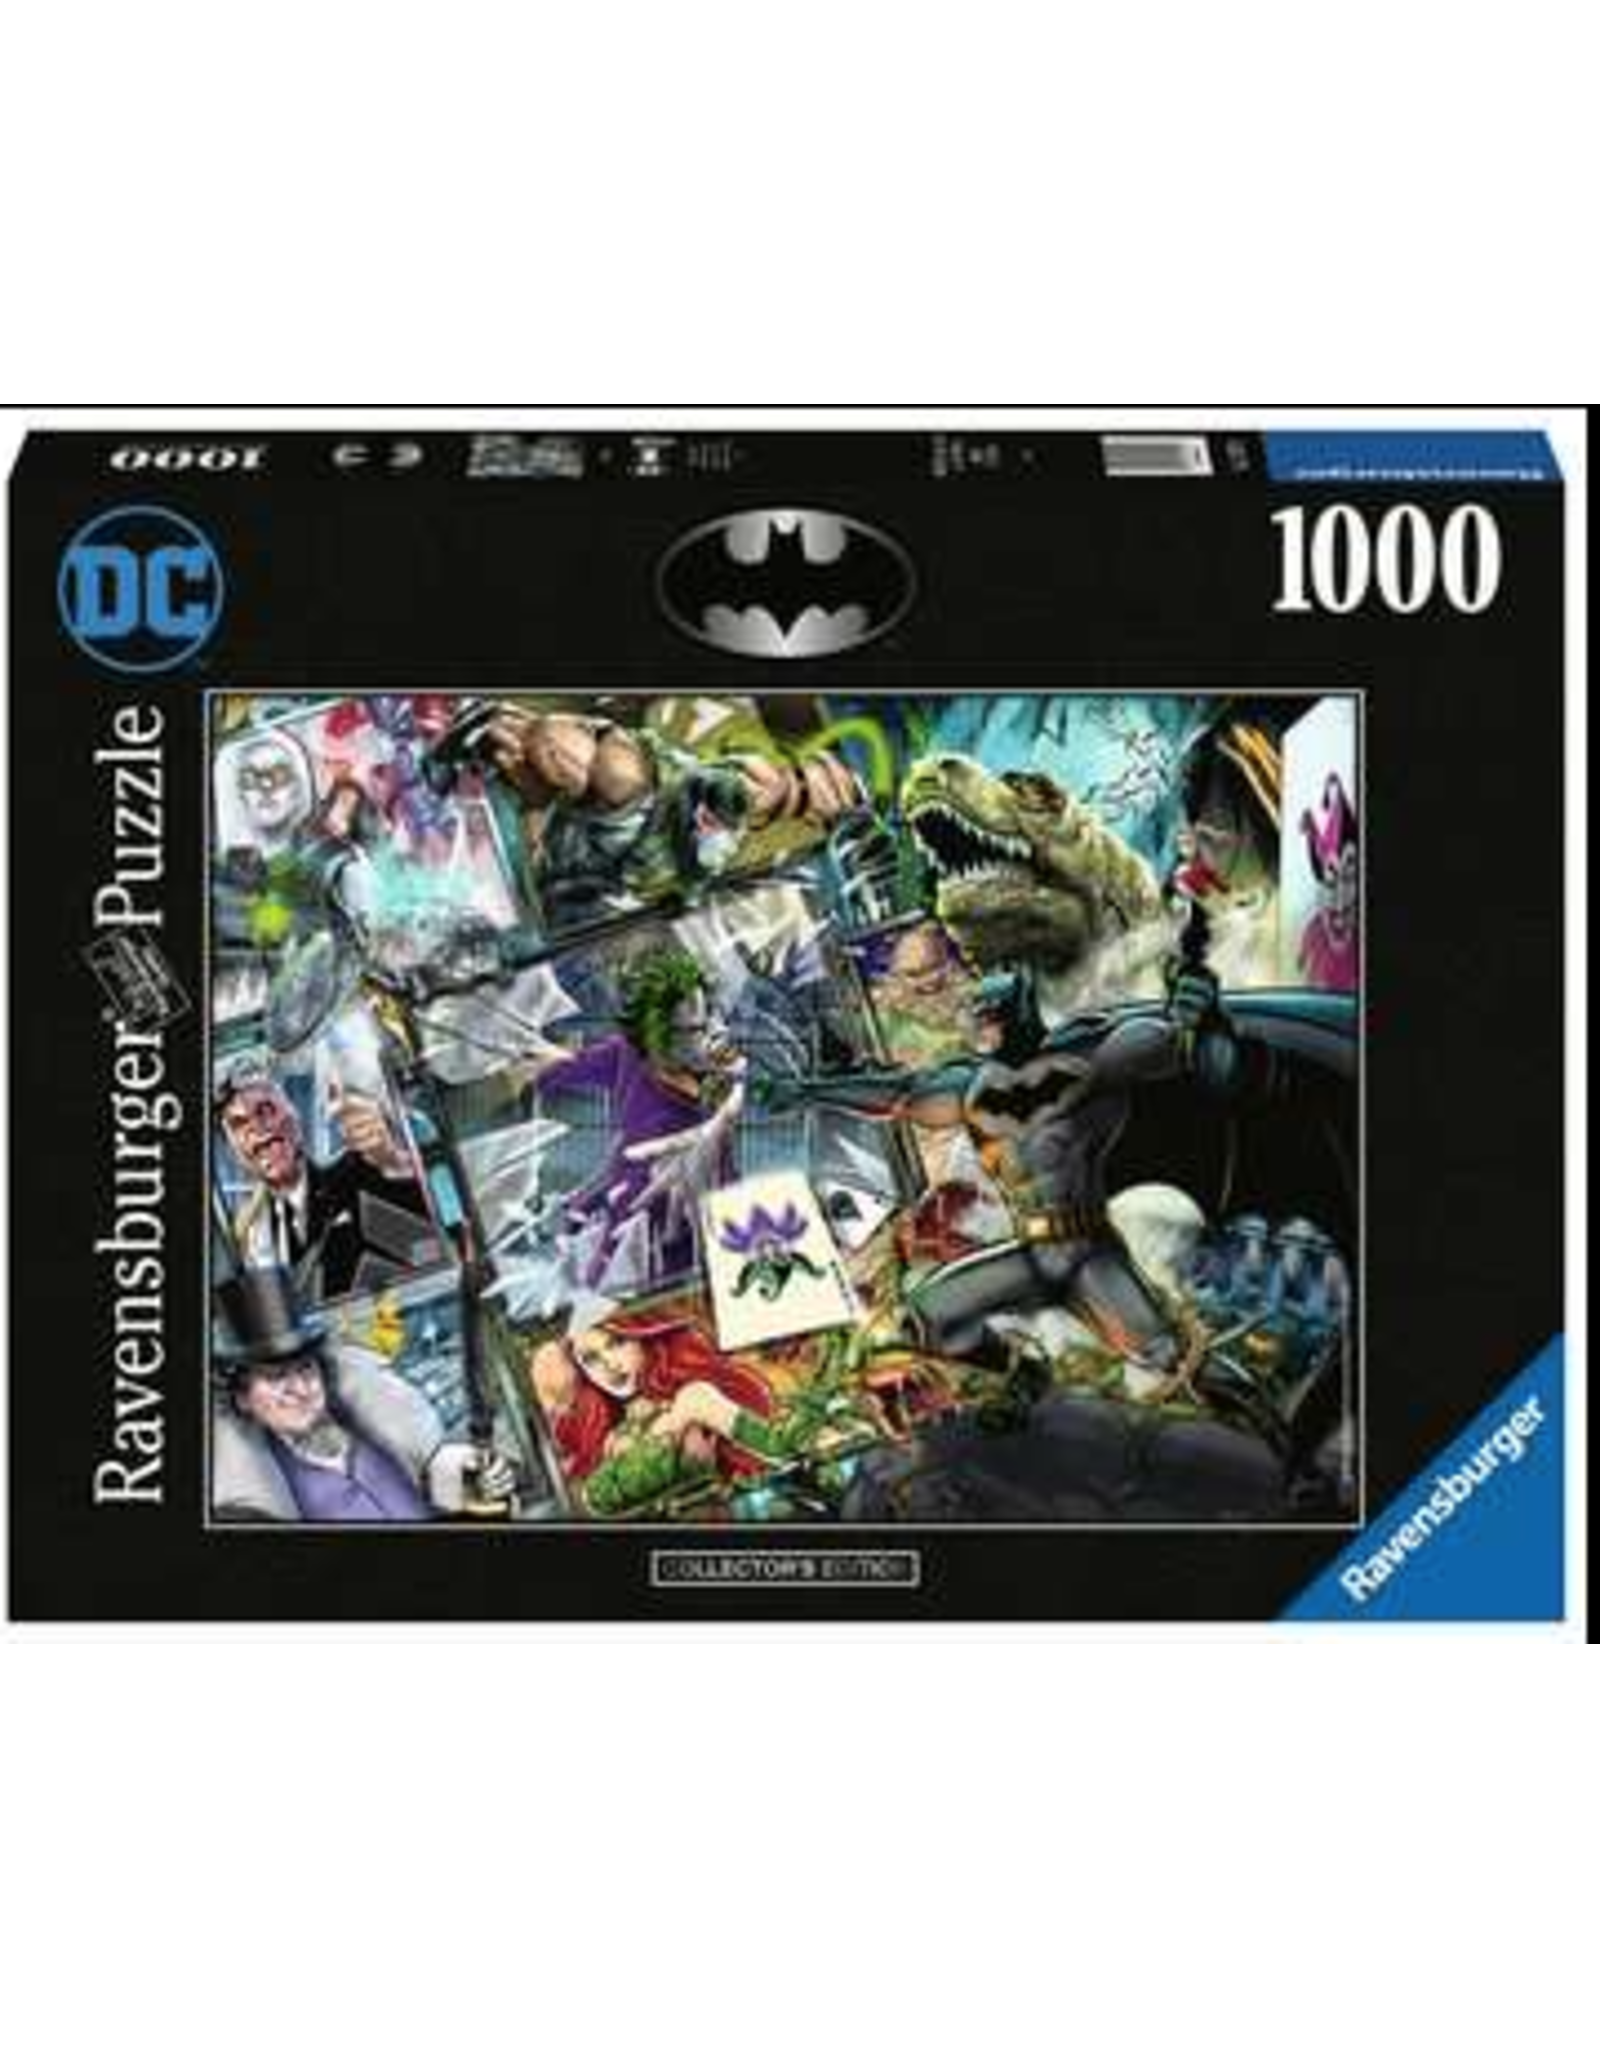 Ravensburger Collector's Edition Batman 1000 Piece Puzzle